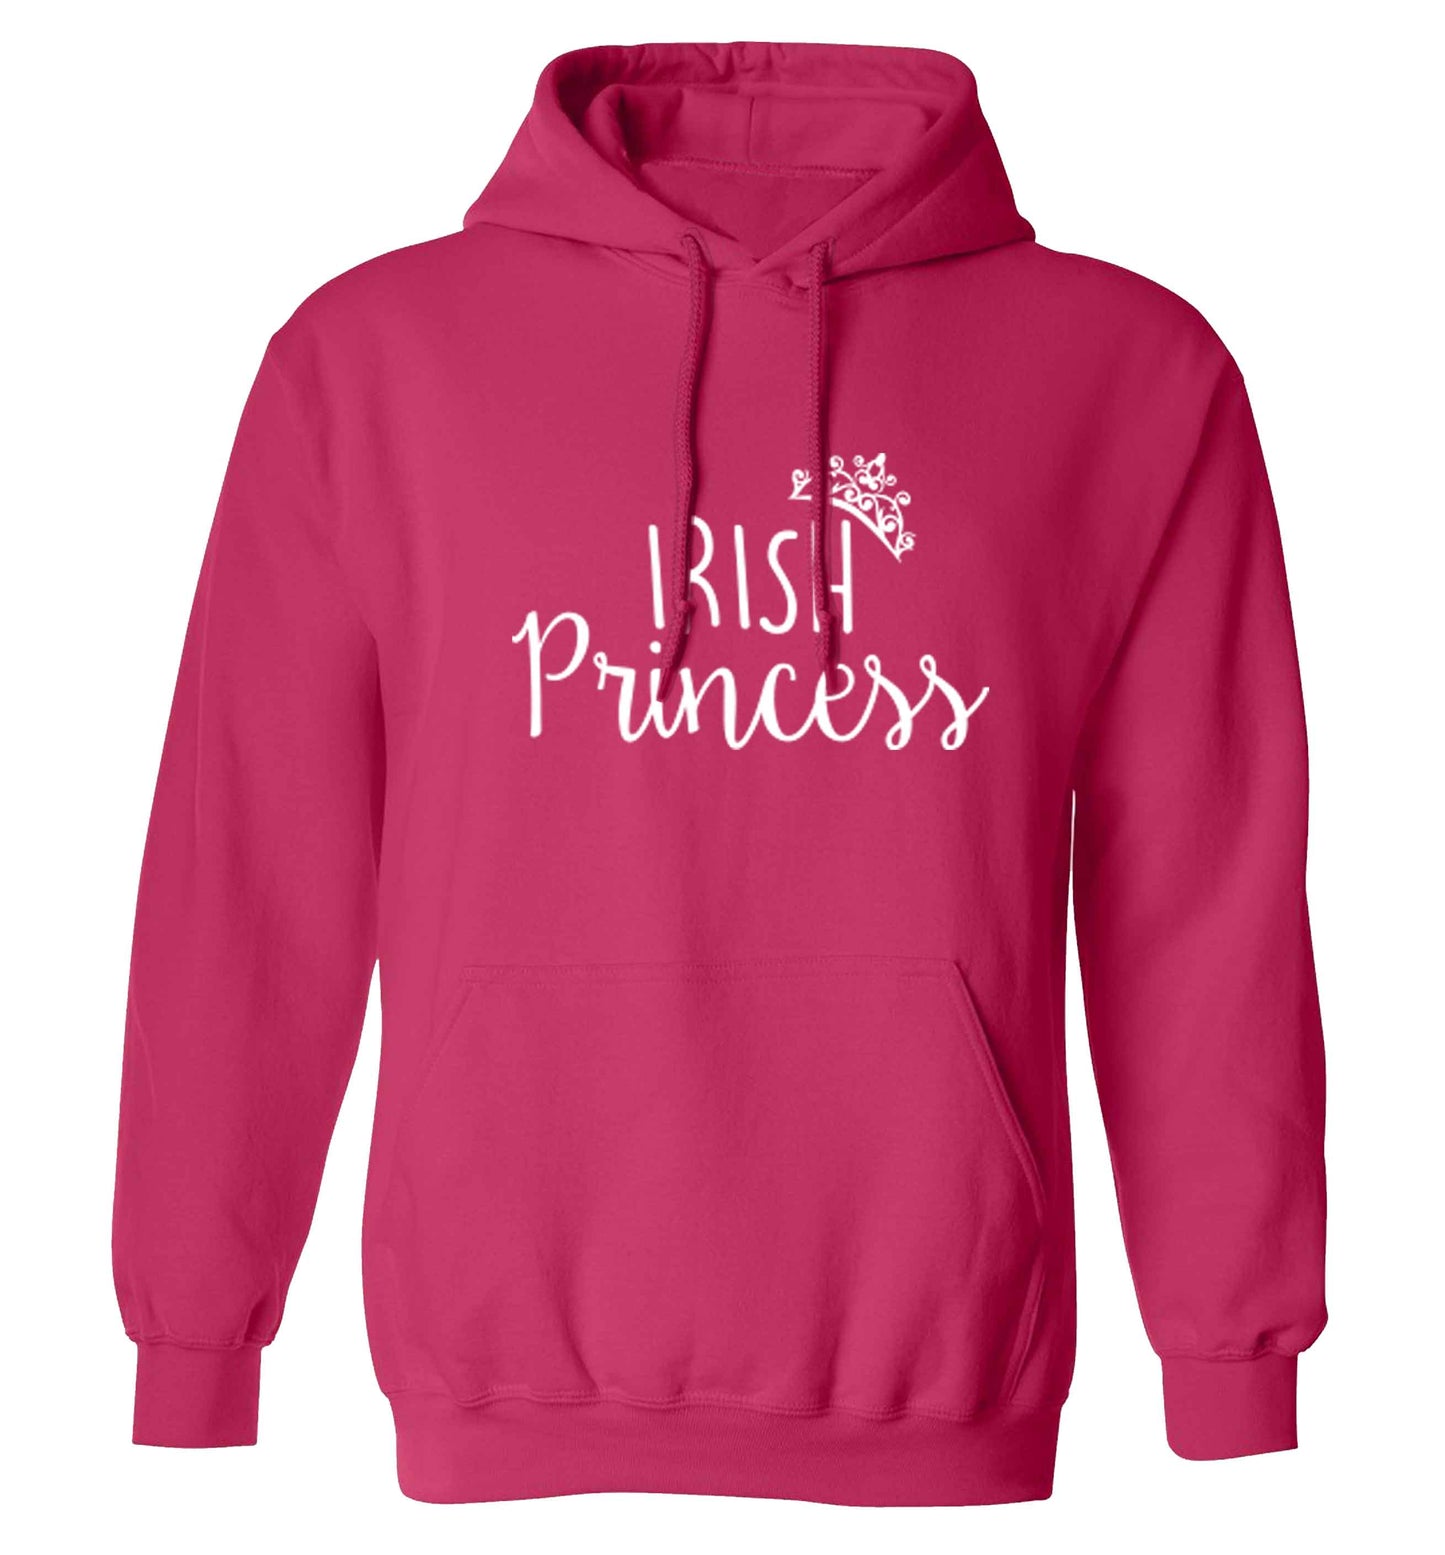 Irish princess adults unisex pink hoodie 2XL